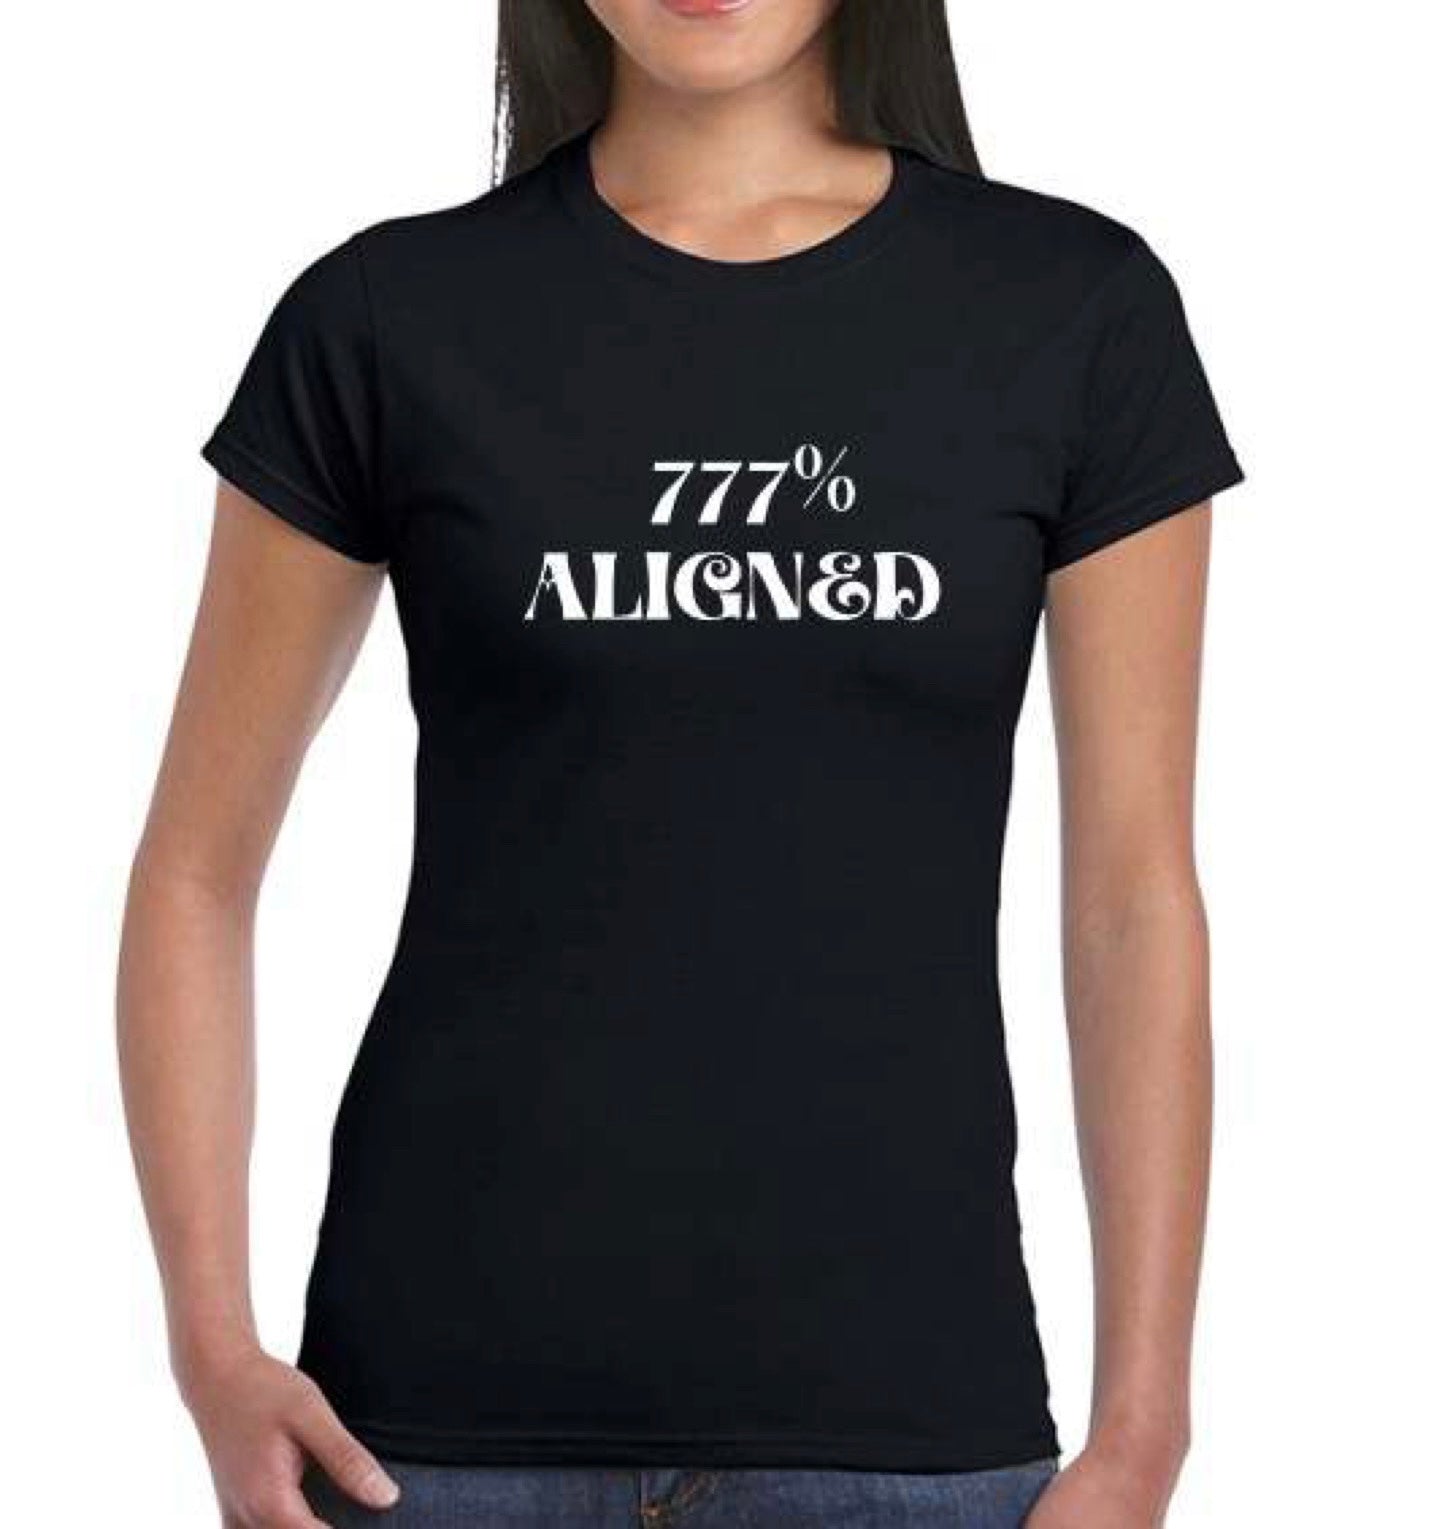 Womens 777% black aligned t-shirts